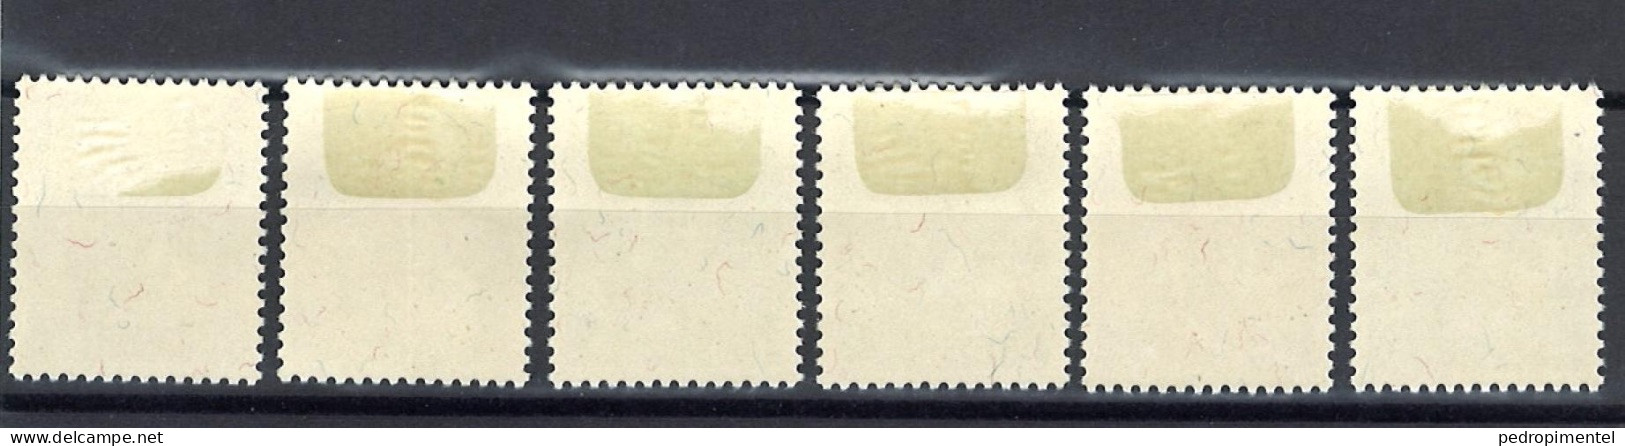 Portugal Stamps 1945 "President Carmona" Condition MH #652-657 - Nuevos